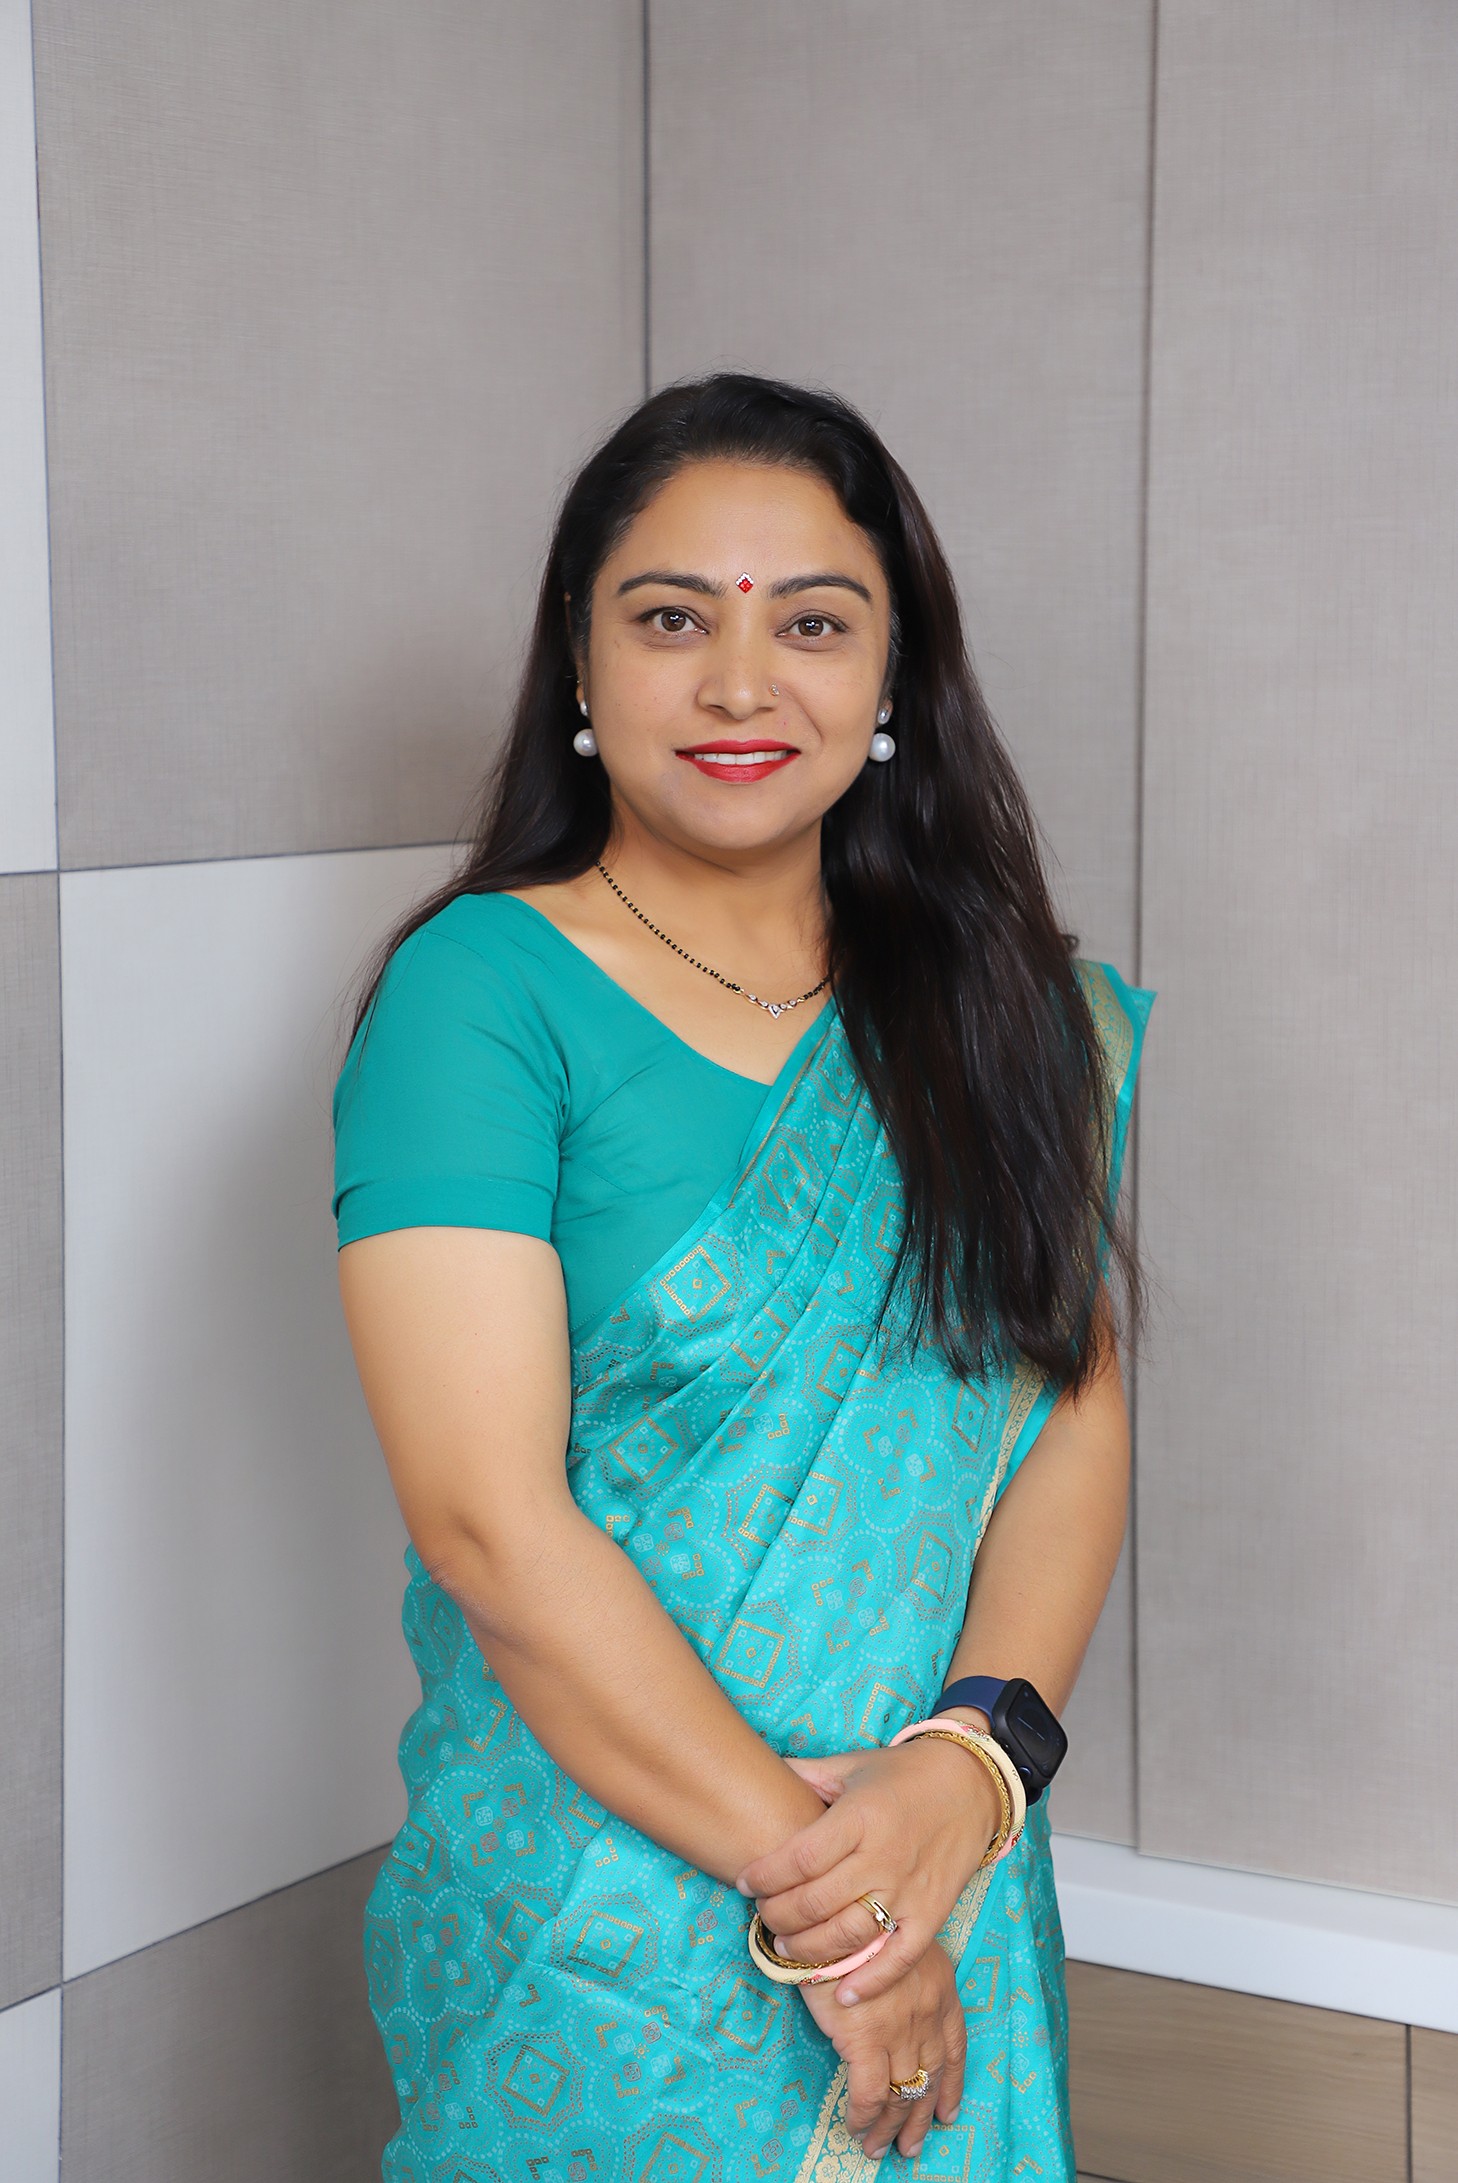  Mrs. Manju Subedi Acharya 